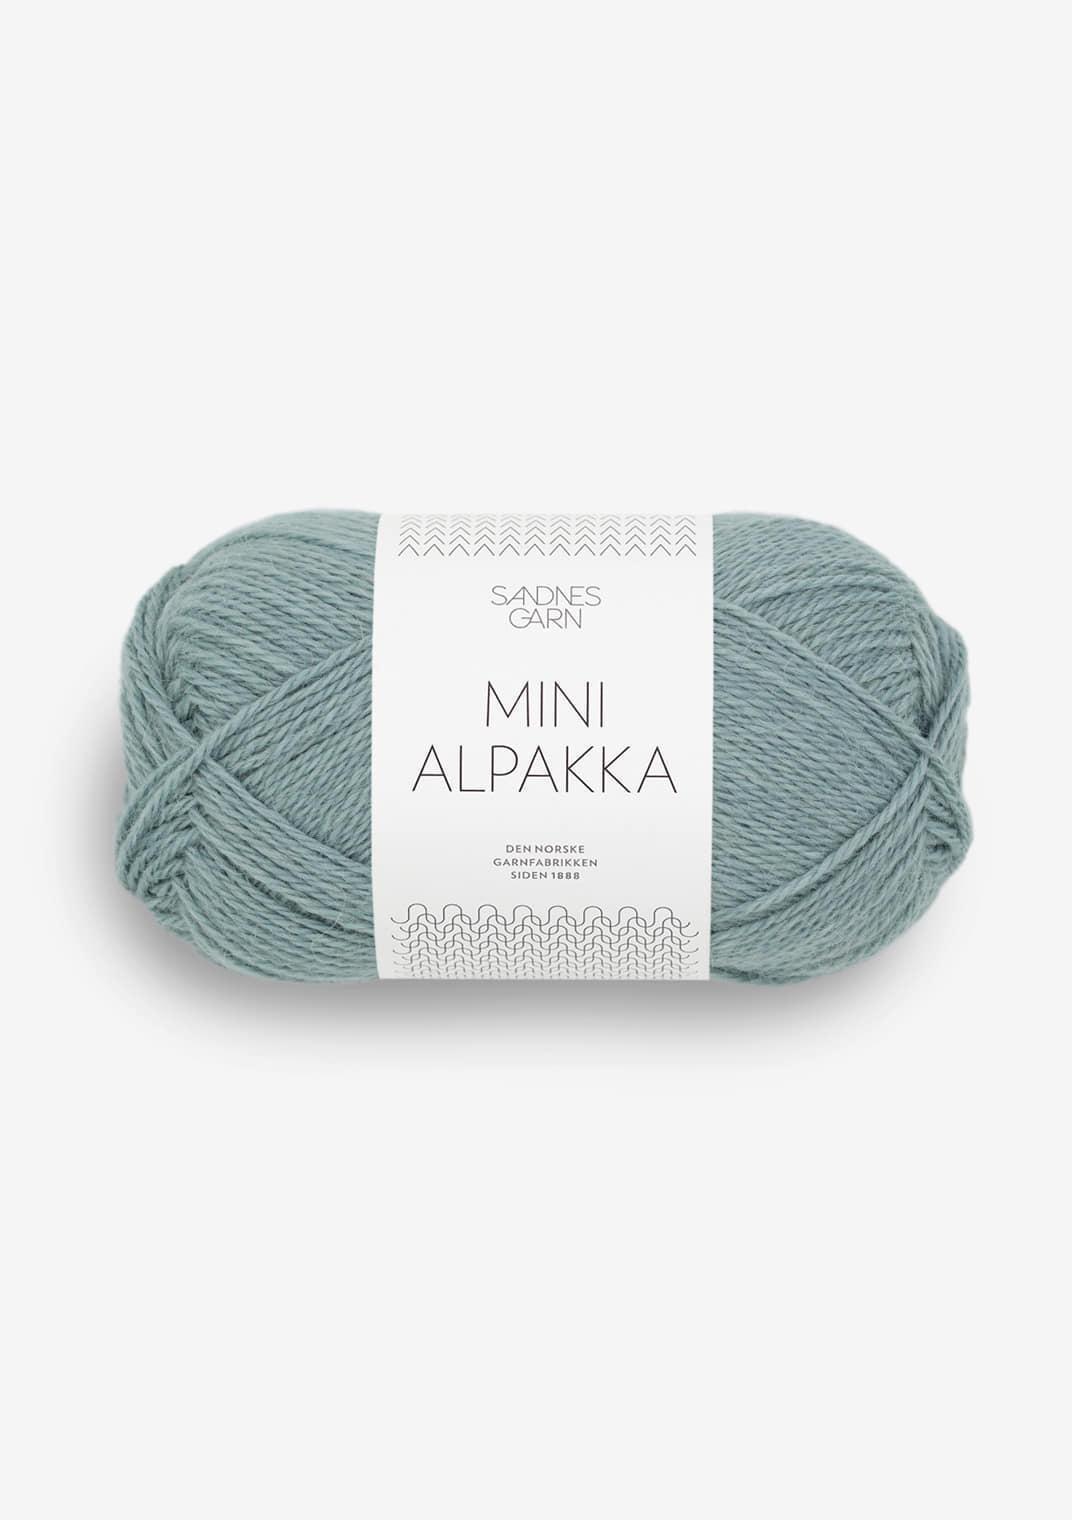 Mini Alpakka yarn by Sandnes Garn